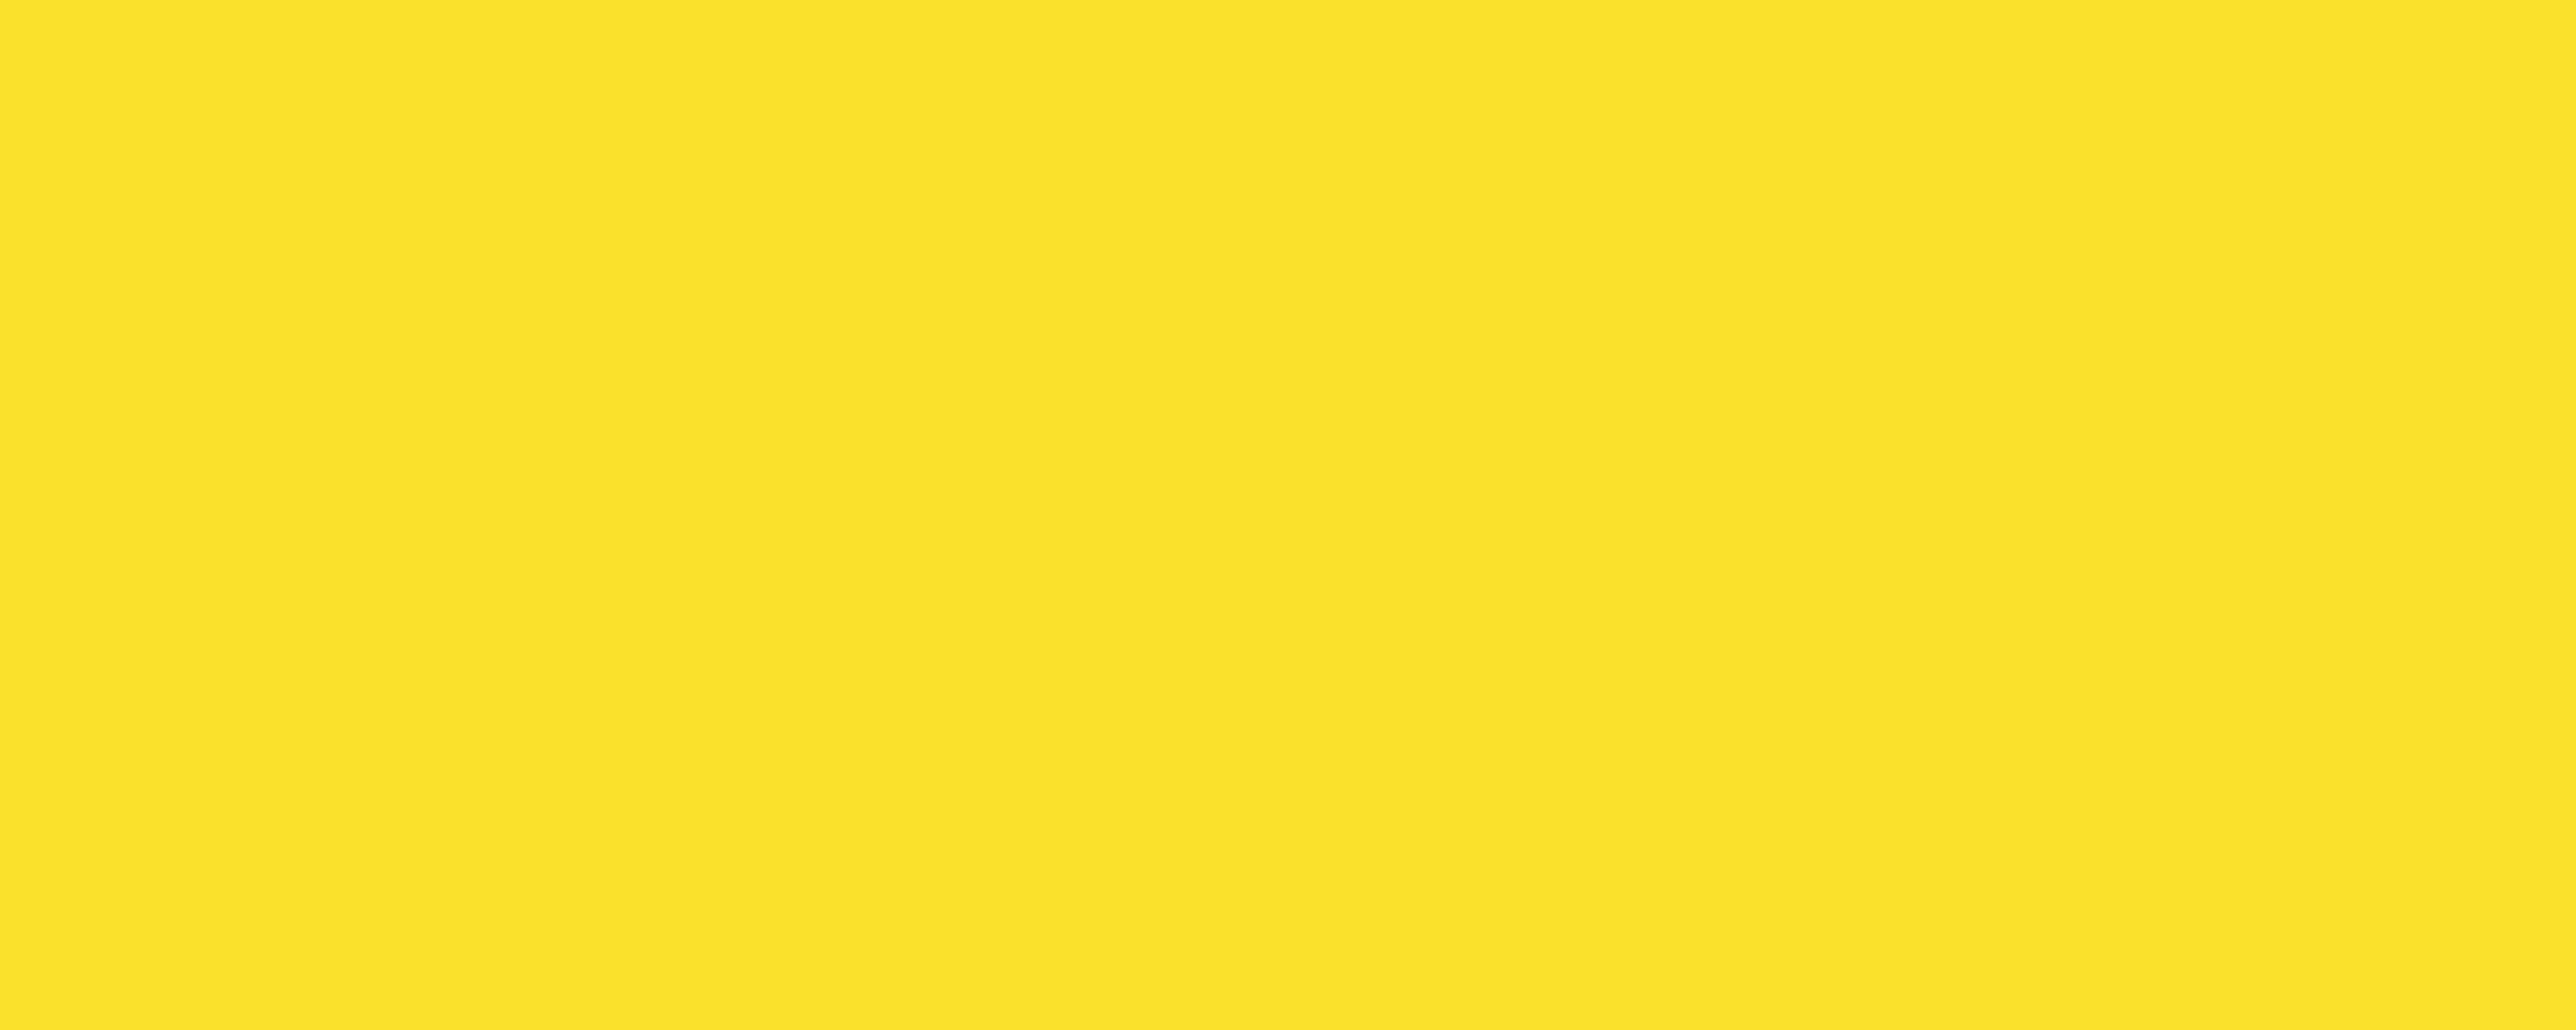 256 160. ЛДСП Эггер цитрусовый желтый u131 st9. RAL 1032 желтый ракитник. RAL 1026 люминесцентный жёлтый. Nn-df383bzpe (инверторная).